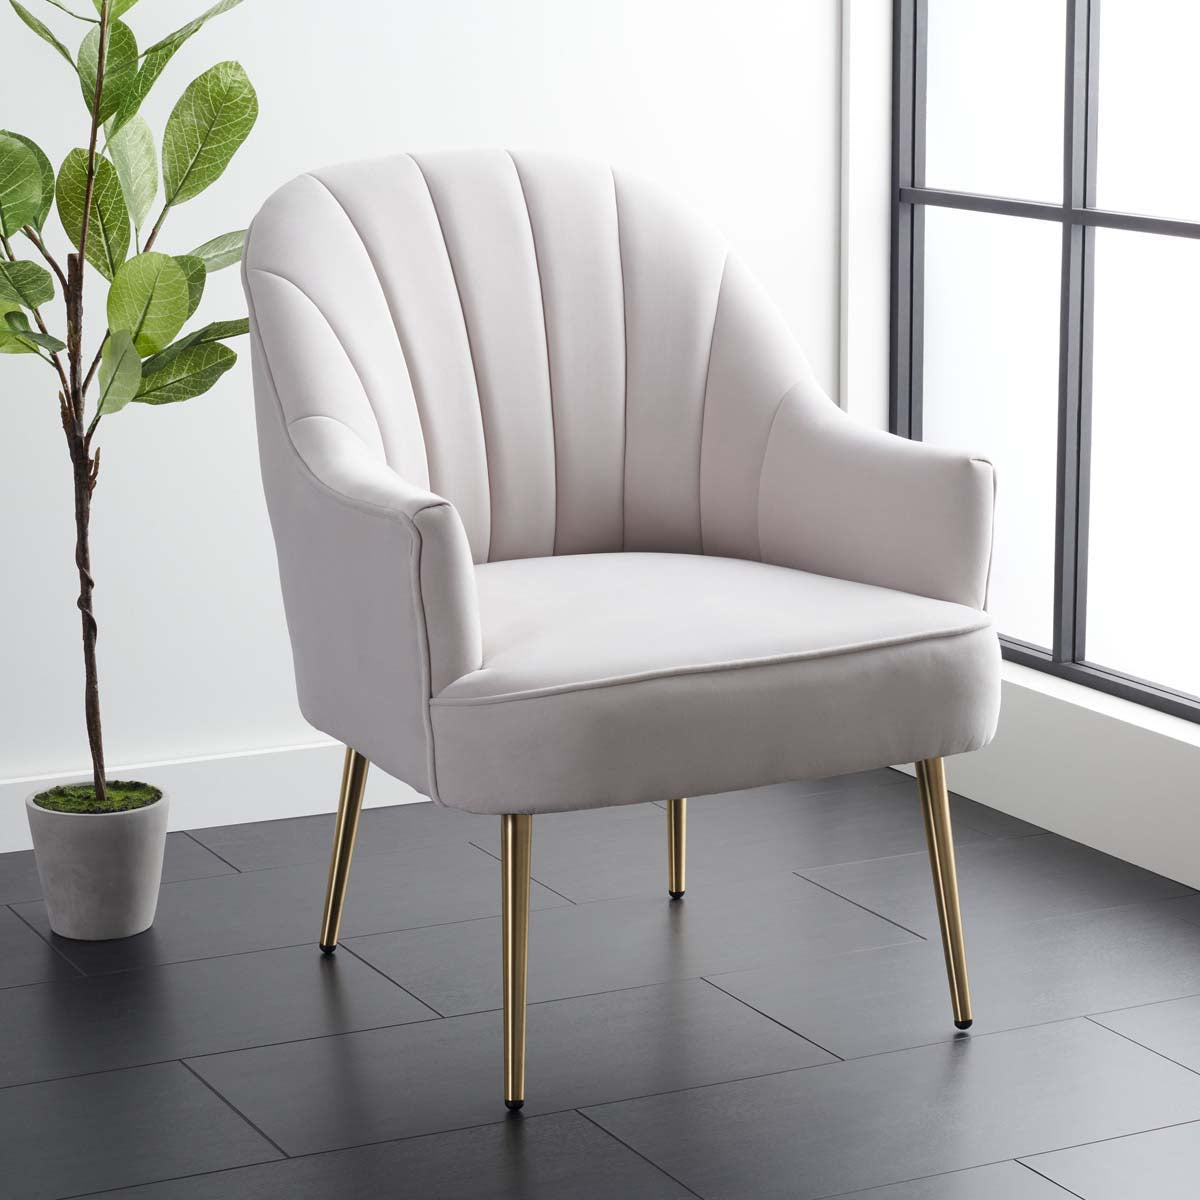 Safavieh Areli Accent Chair , ACH4004 - Light Grey